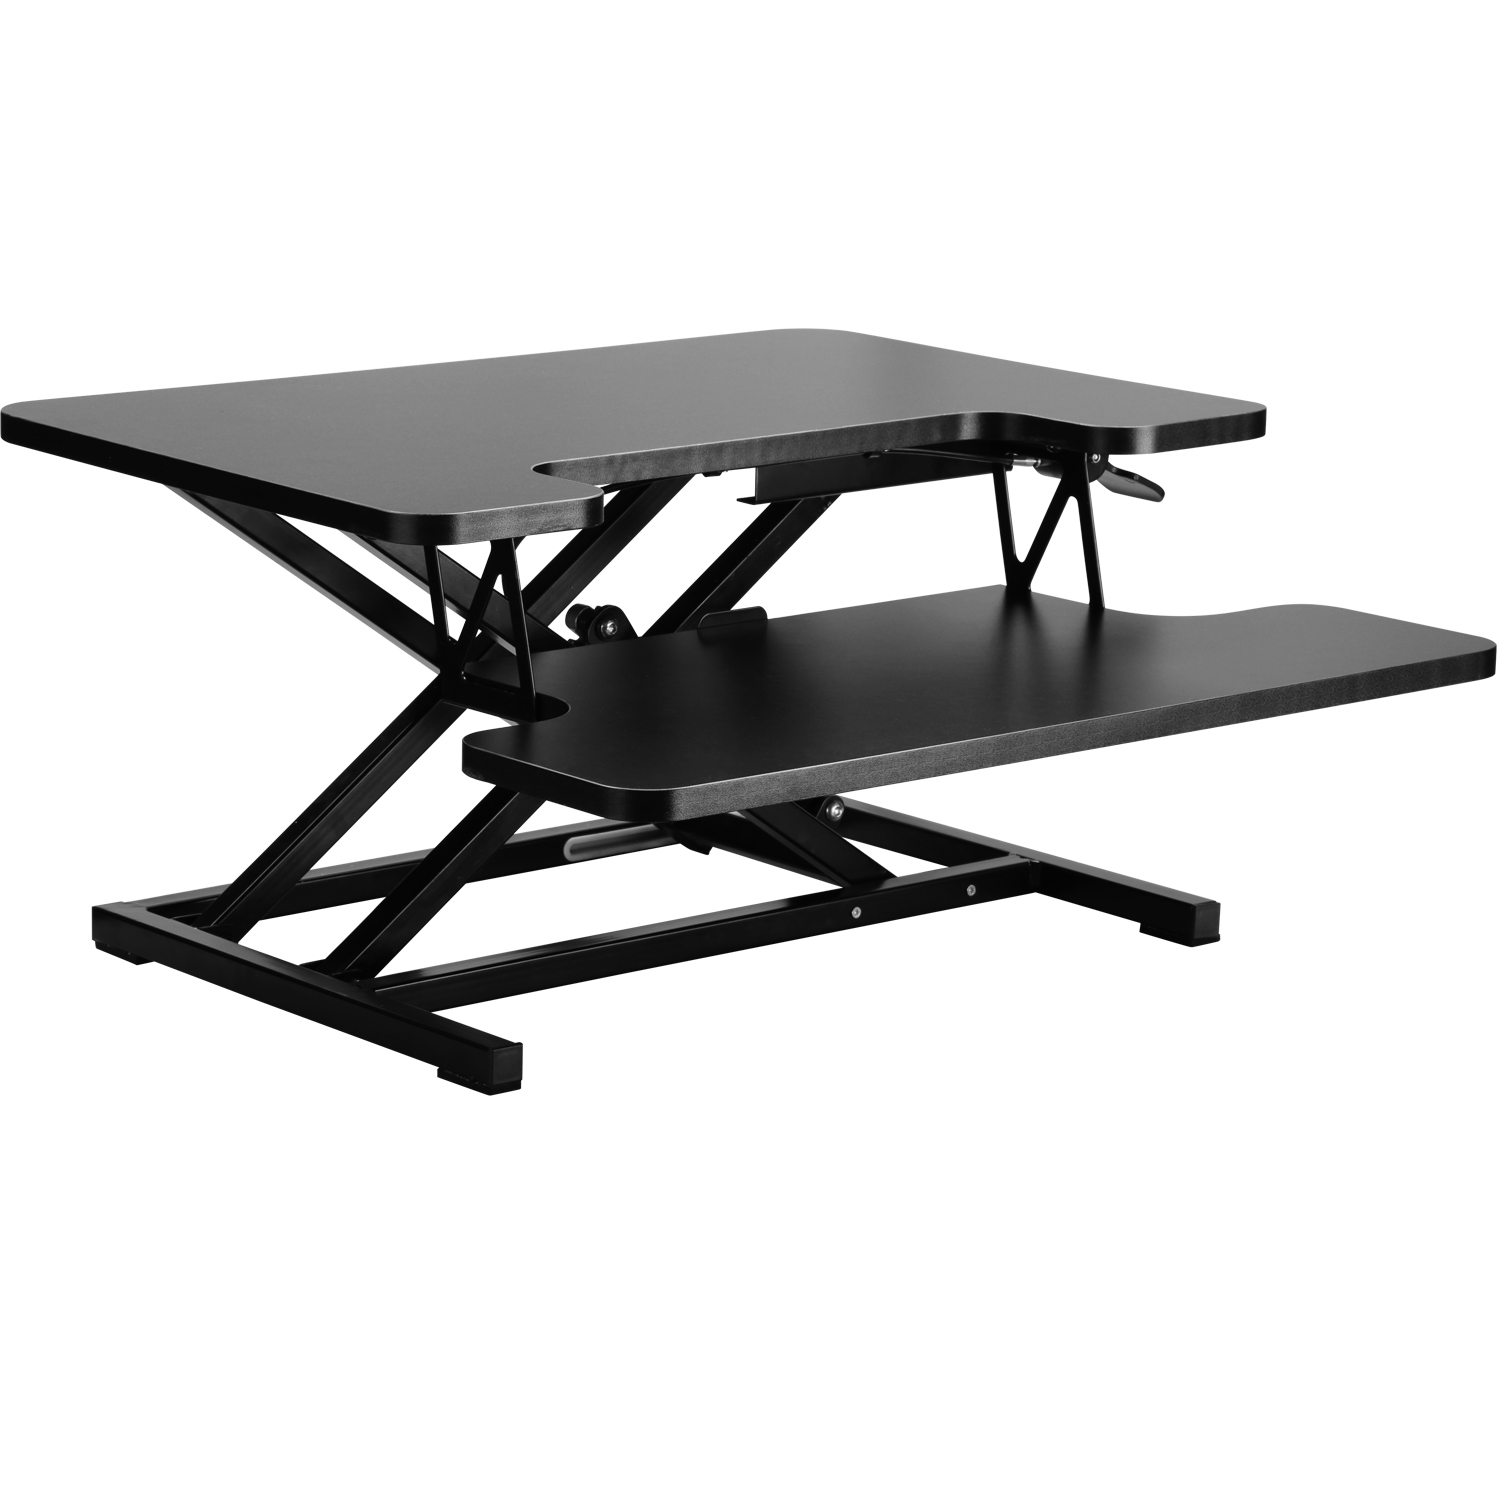 Ainfox 24" Height Adjustable Desk Converter $35 + Free Shipping